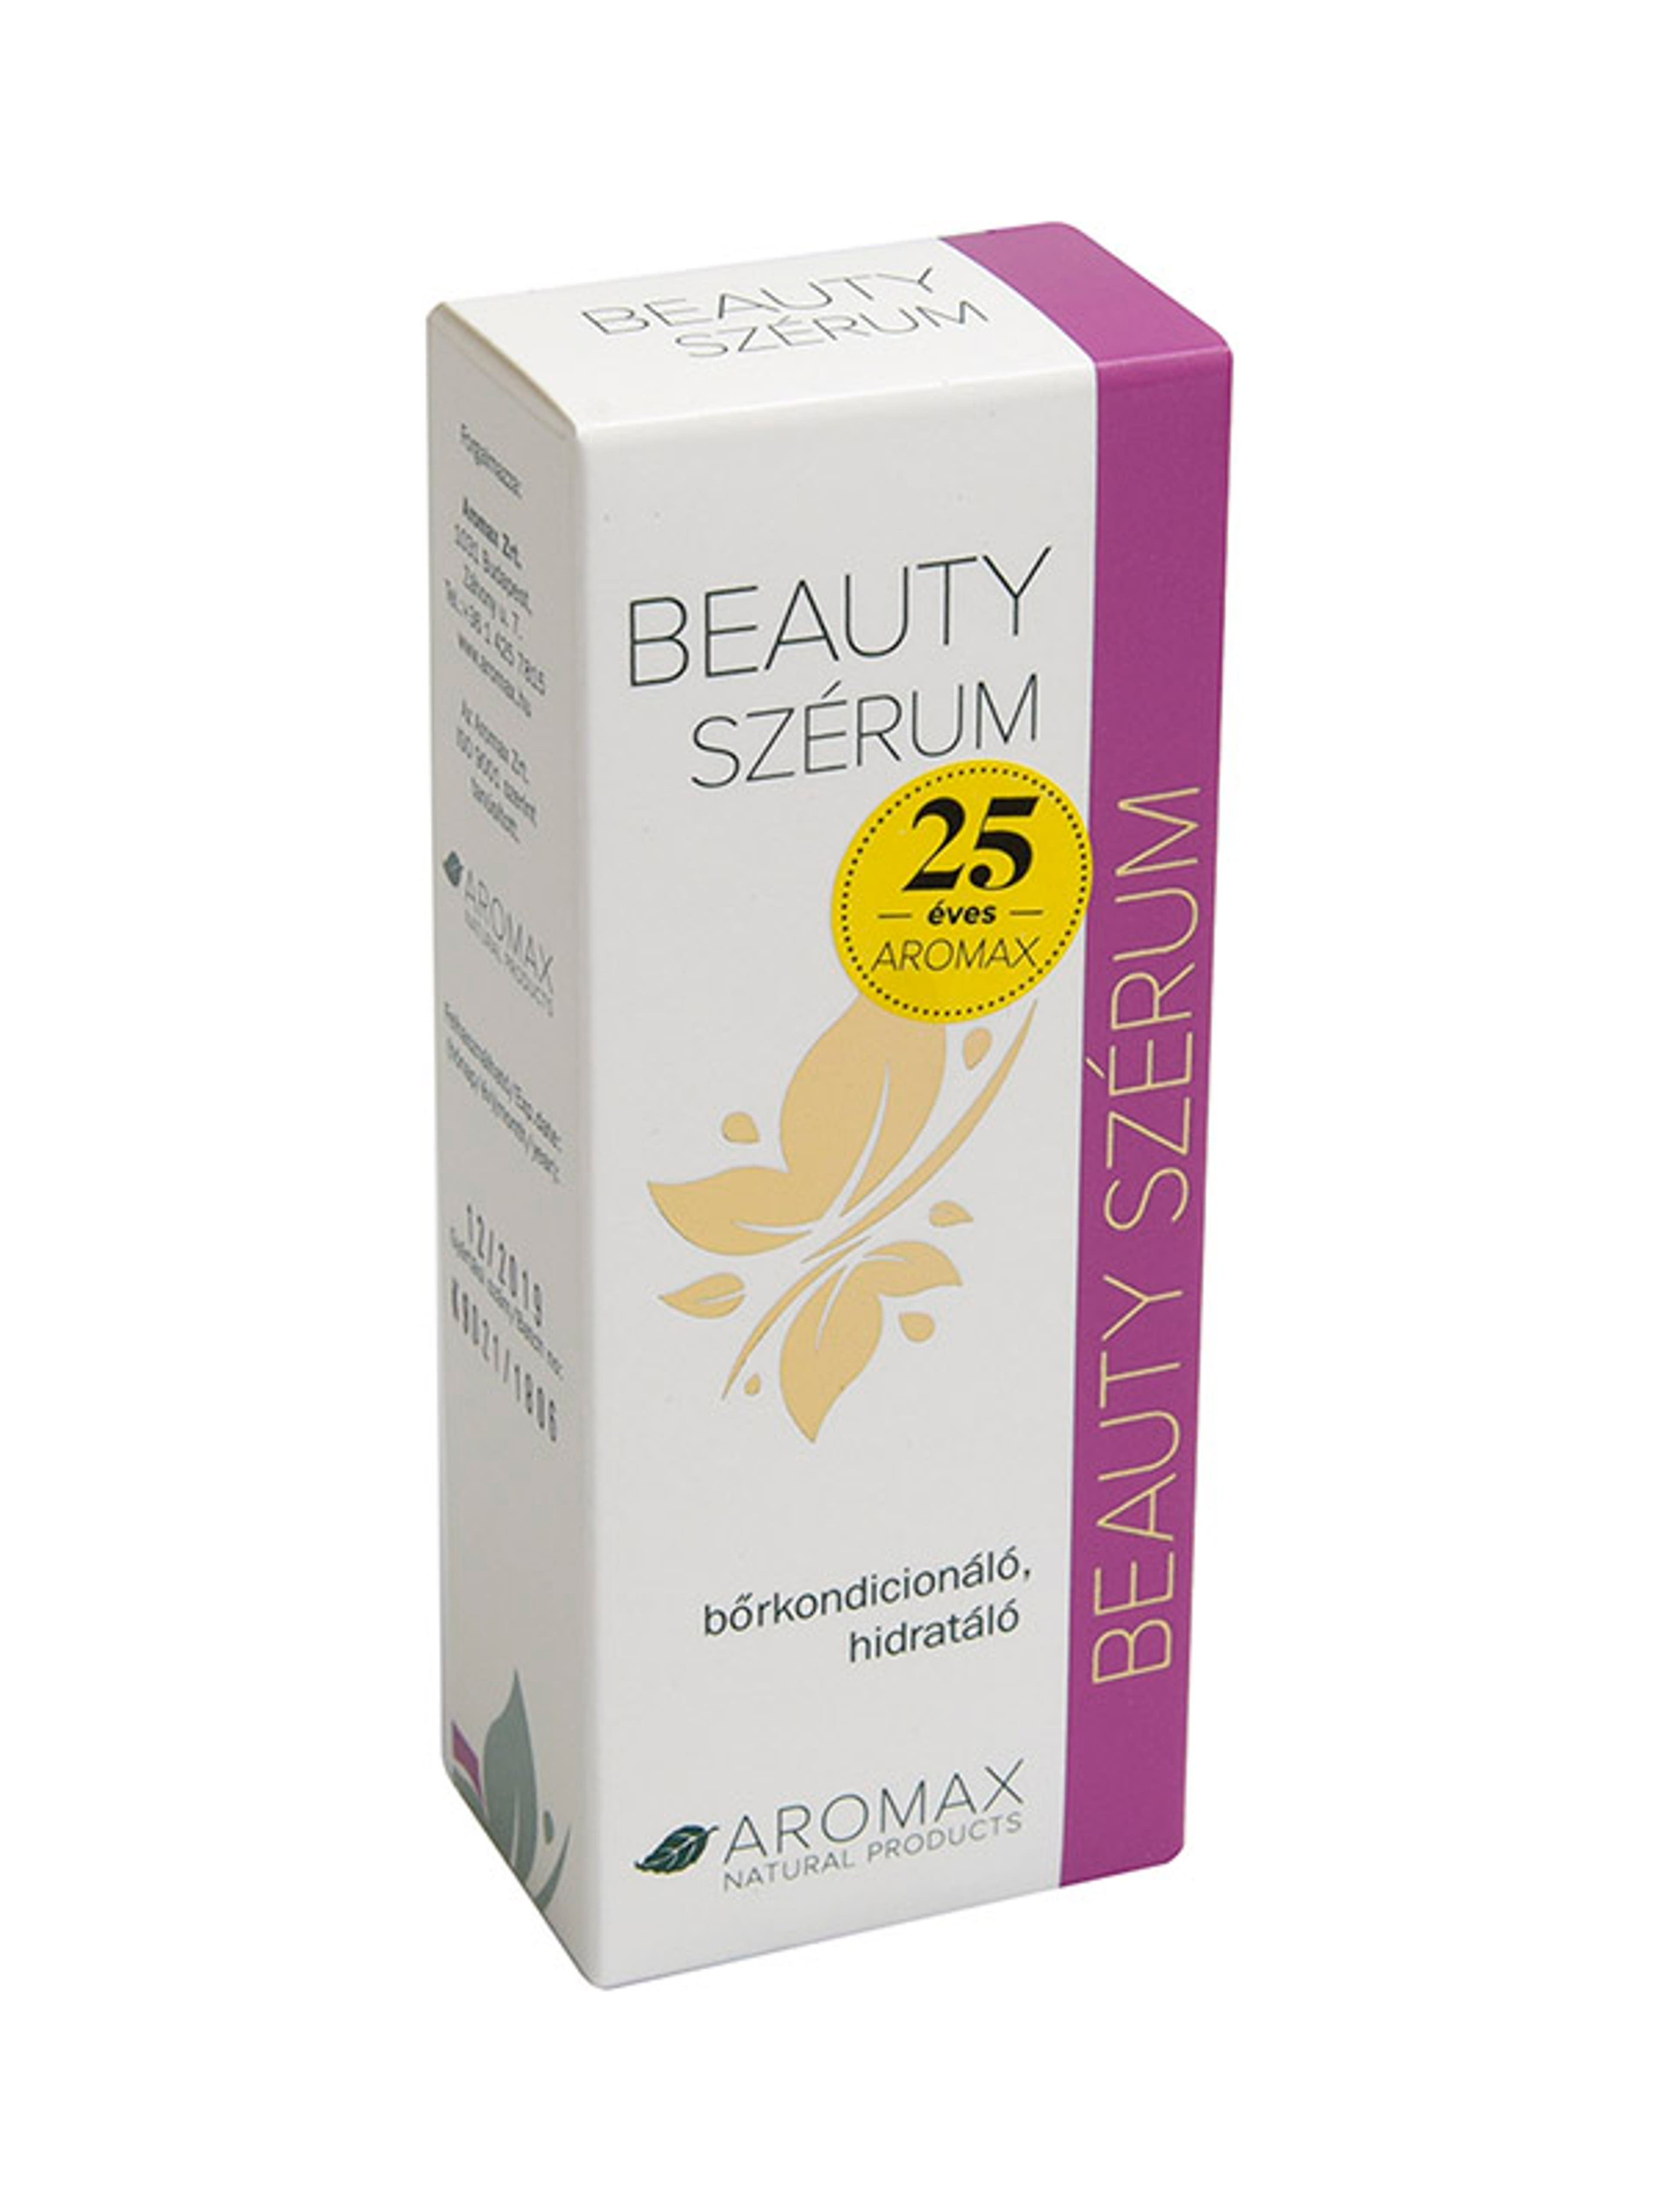 Aromax beauty szérum - 20 ml